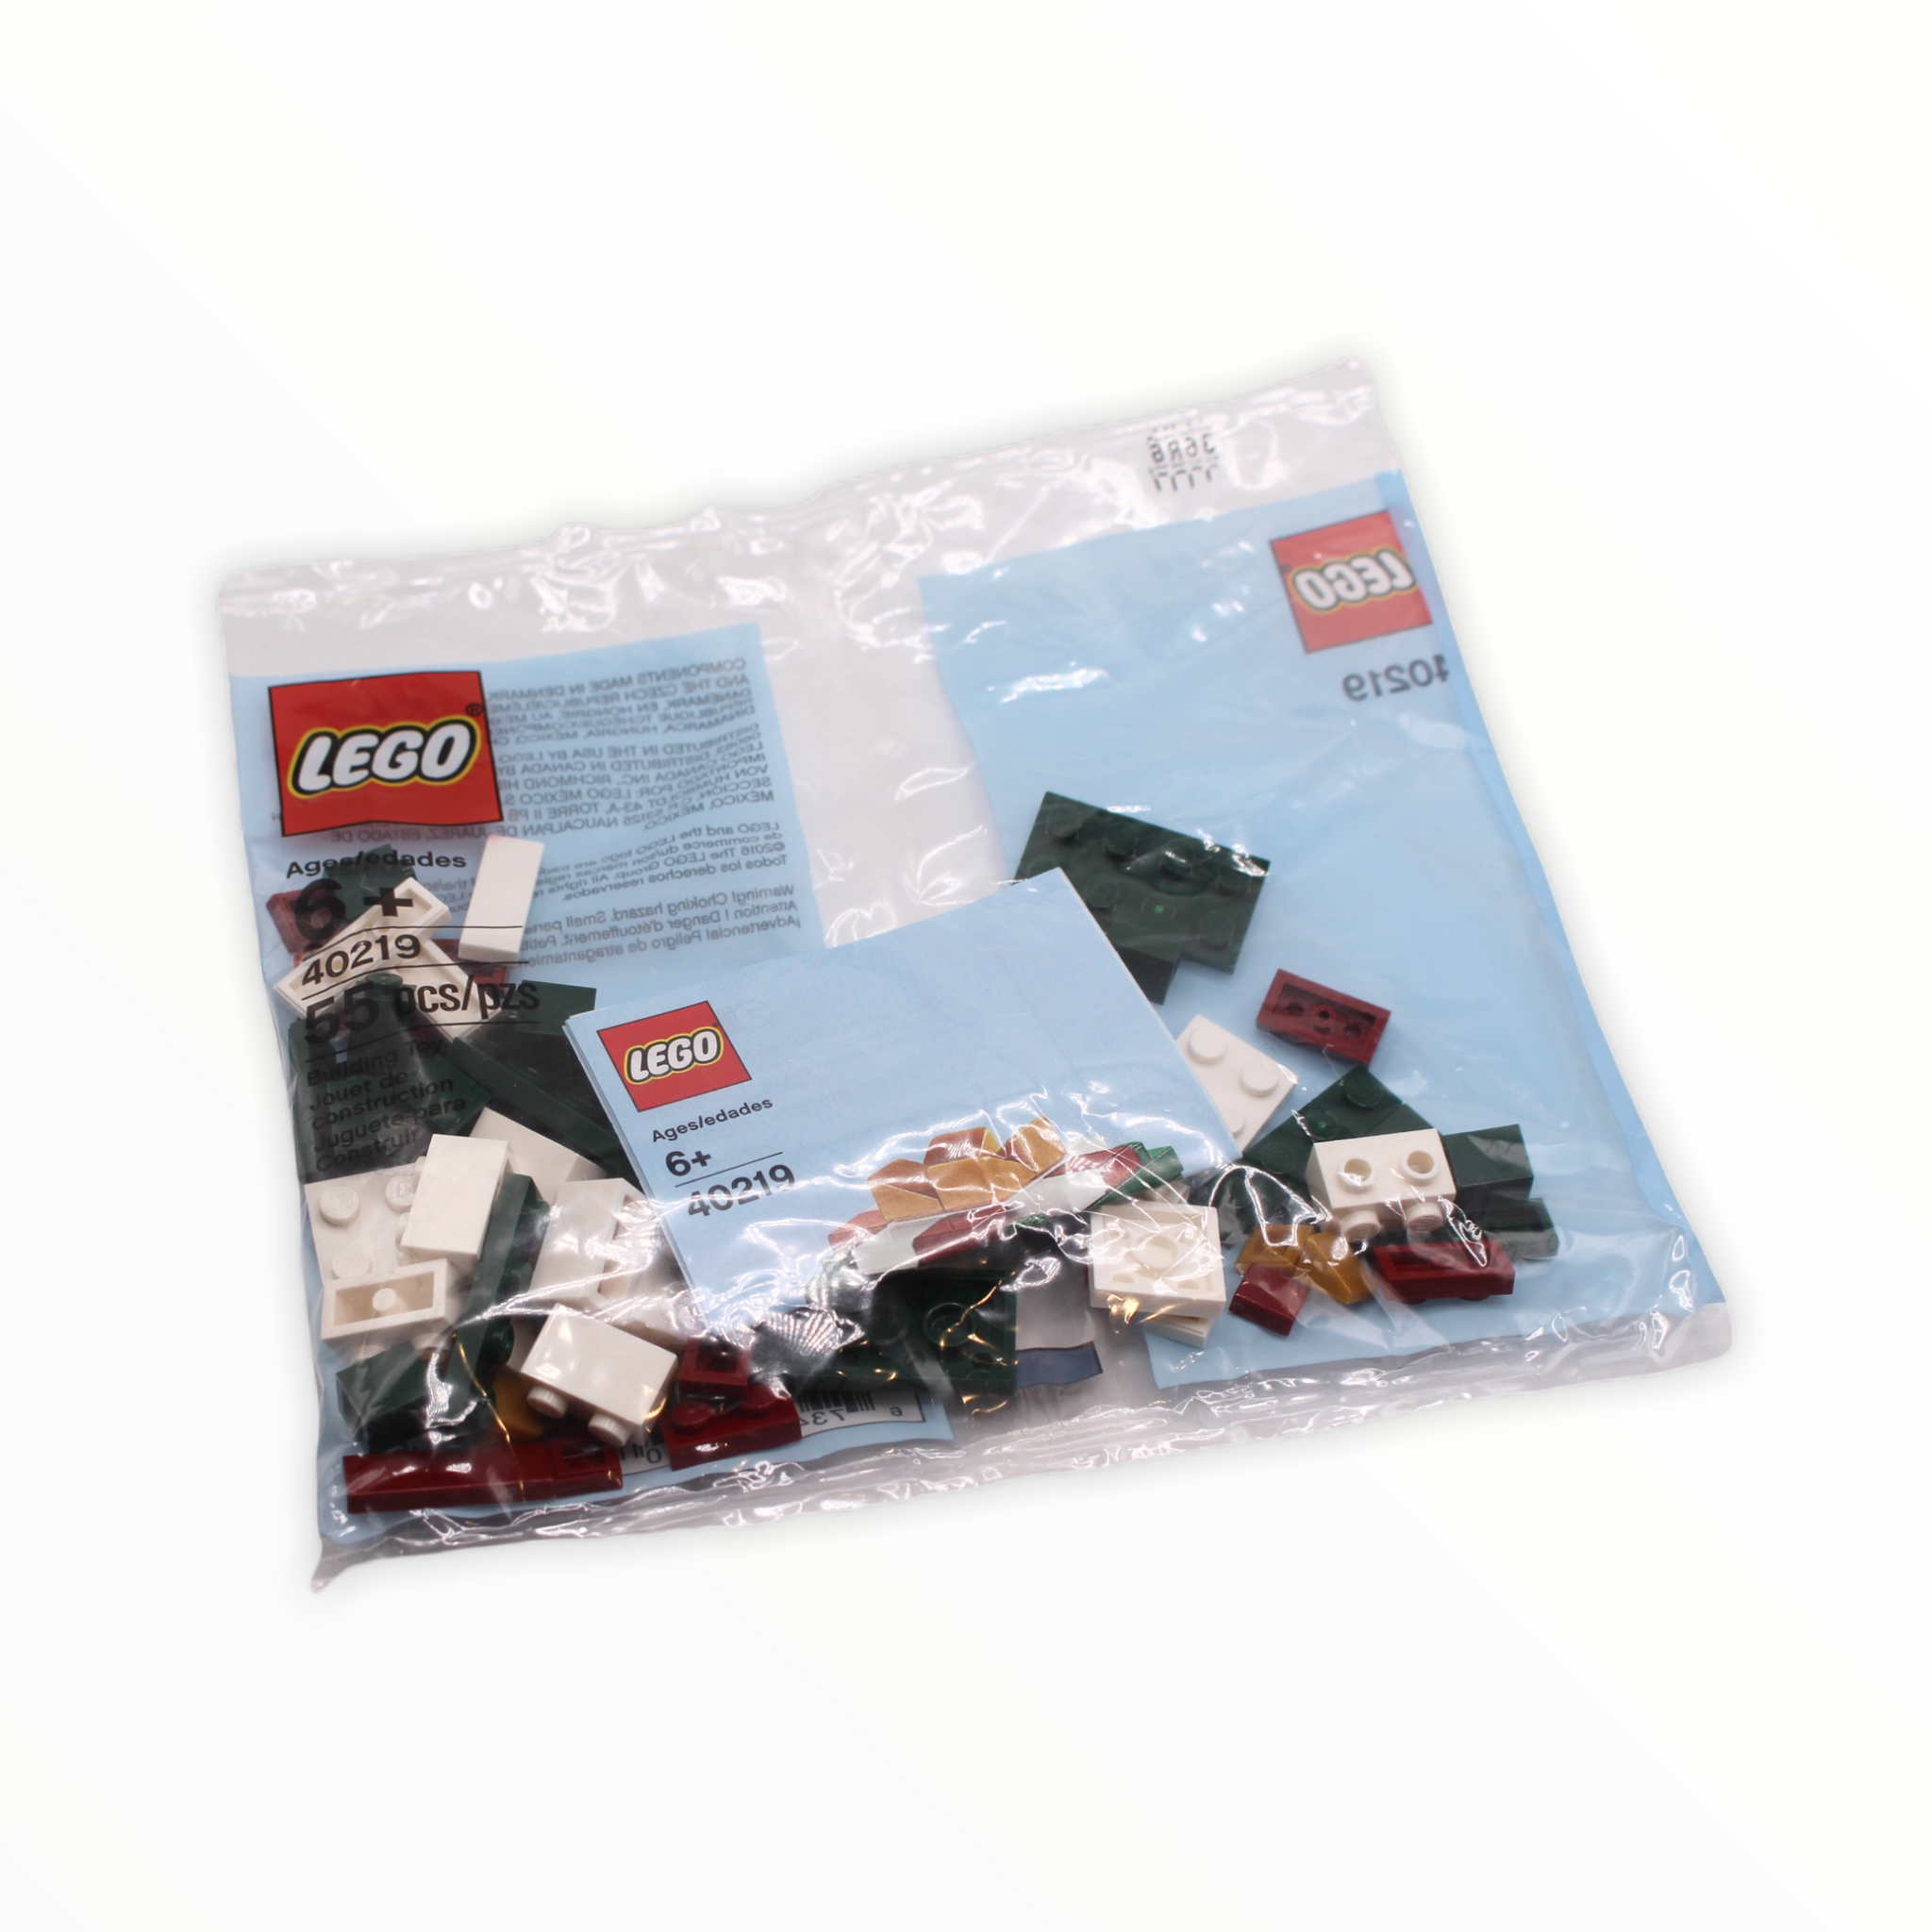 Polybag 40219 LEGO Monthly Mini Model Build Set - 2016 12 December Christmas Present Box